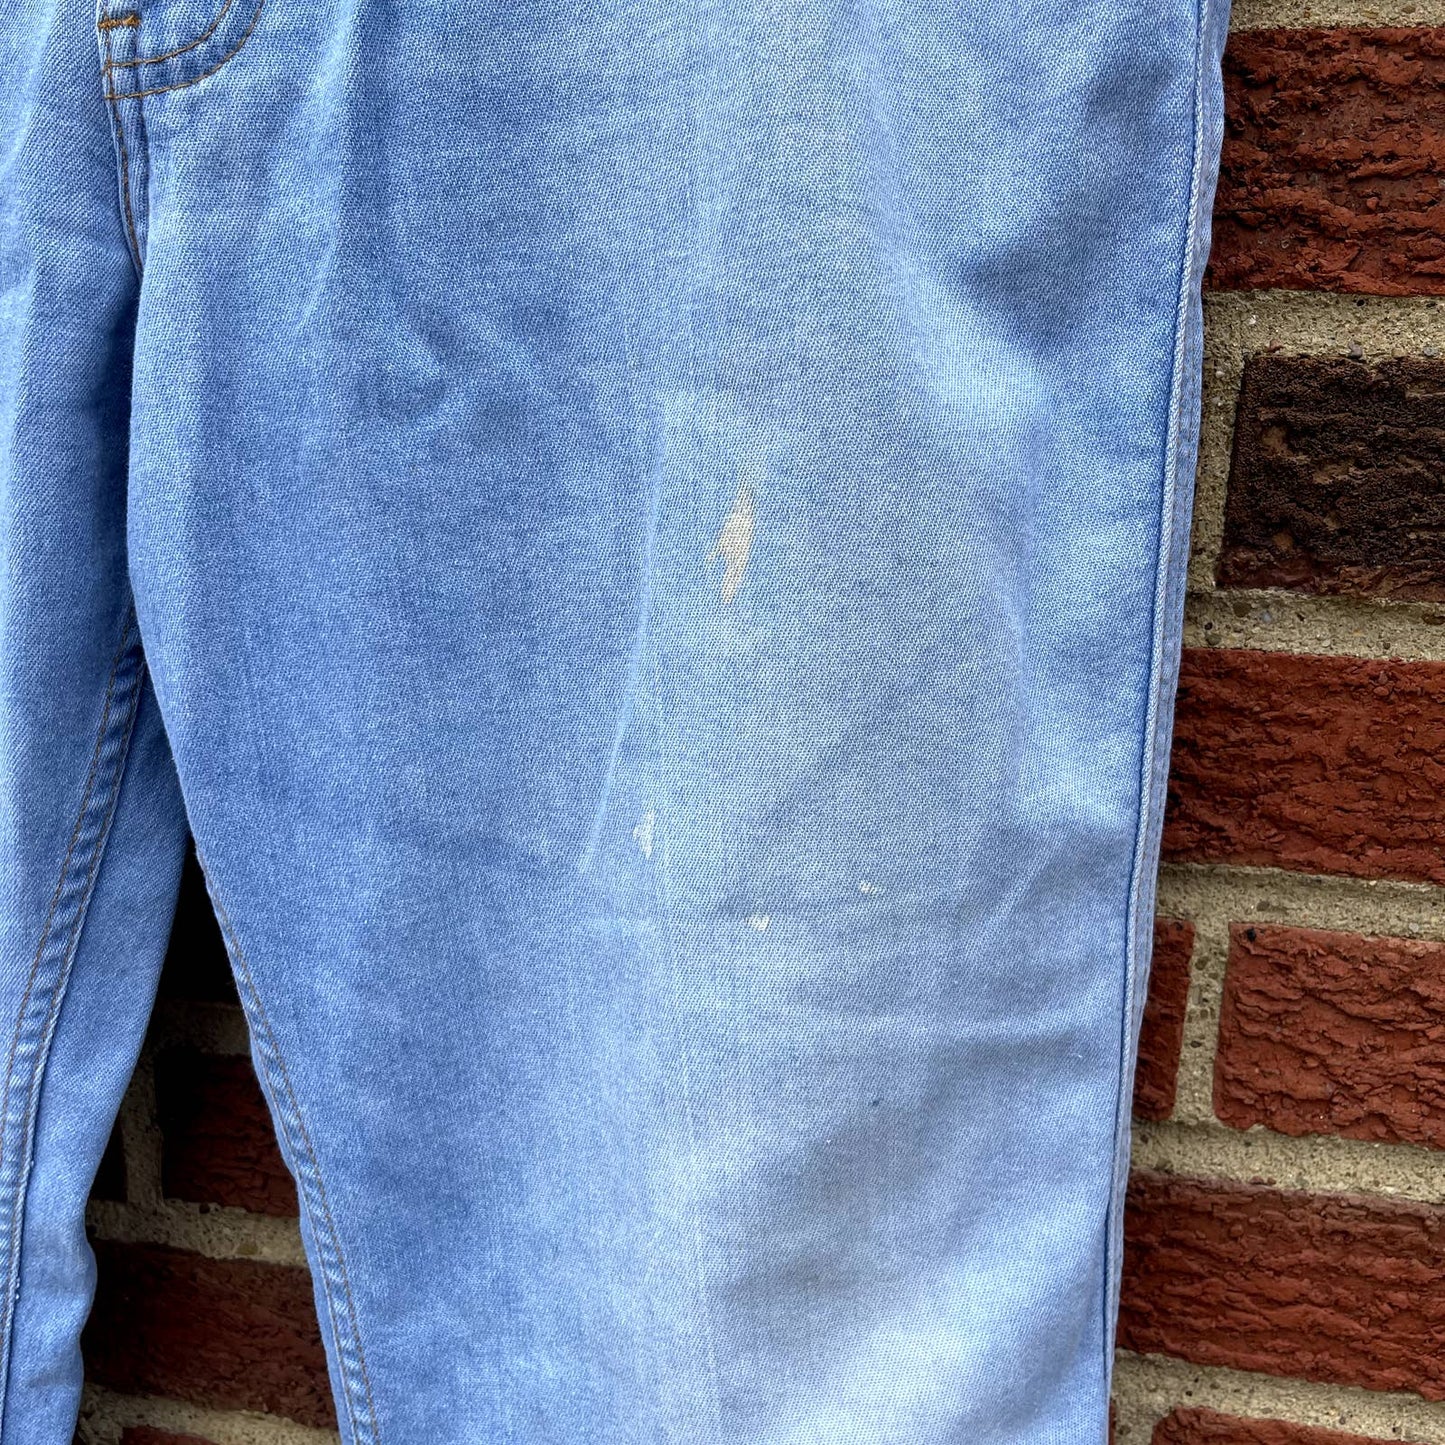 Vintage Levi's Brown Tab Jeans (36x32) 90s Distressed Jeans